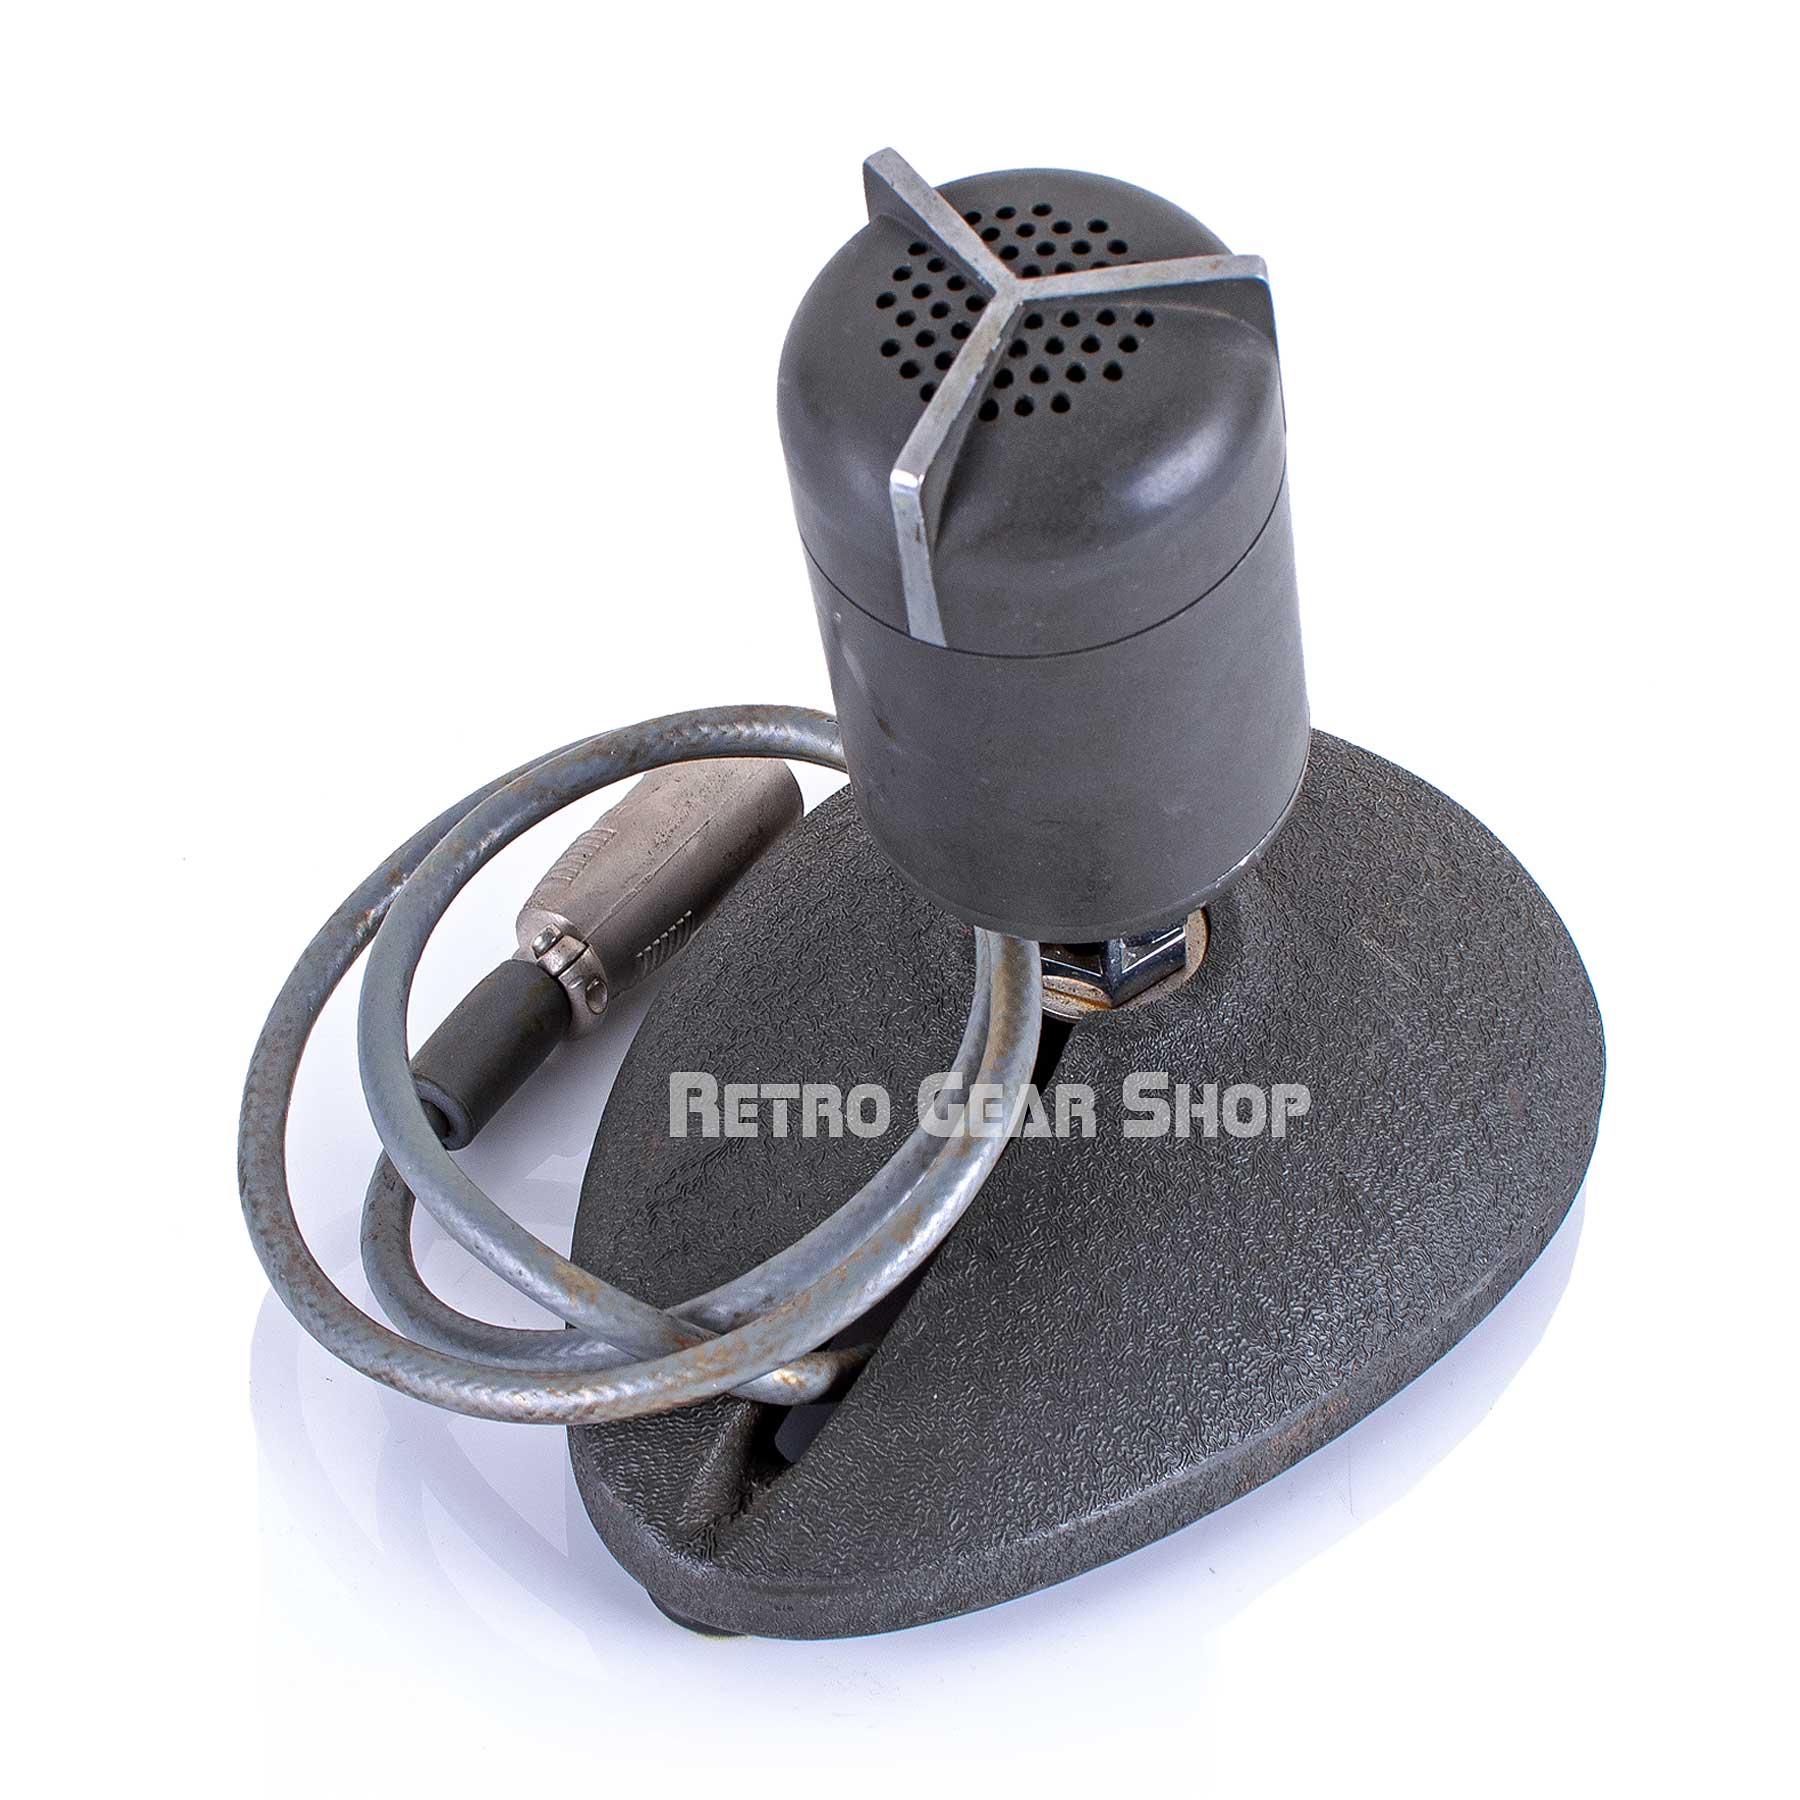 Altec 633A Salt Shaker Microphone Rear